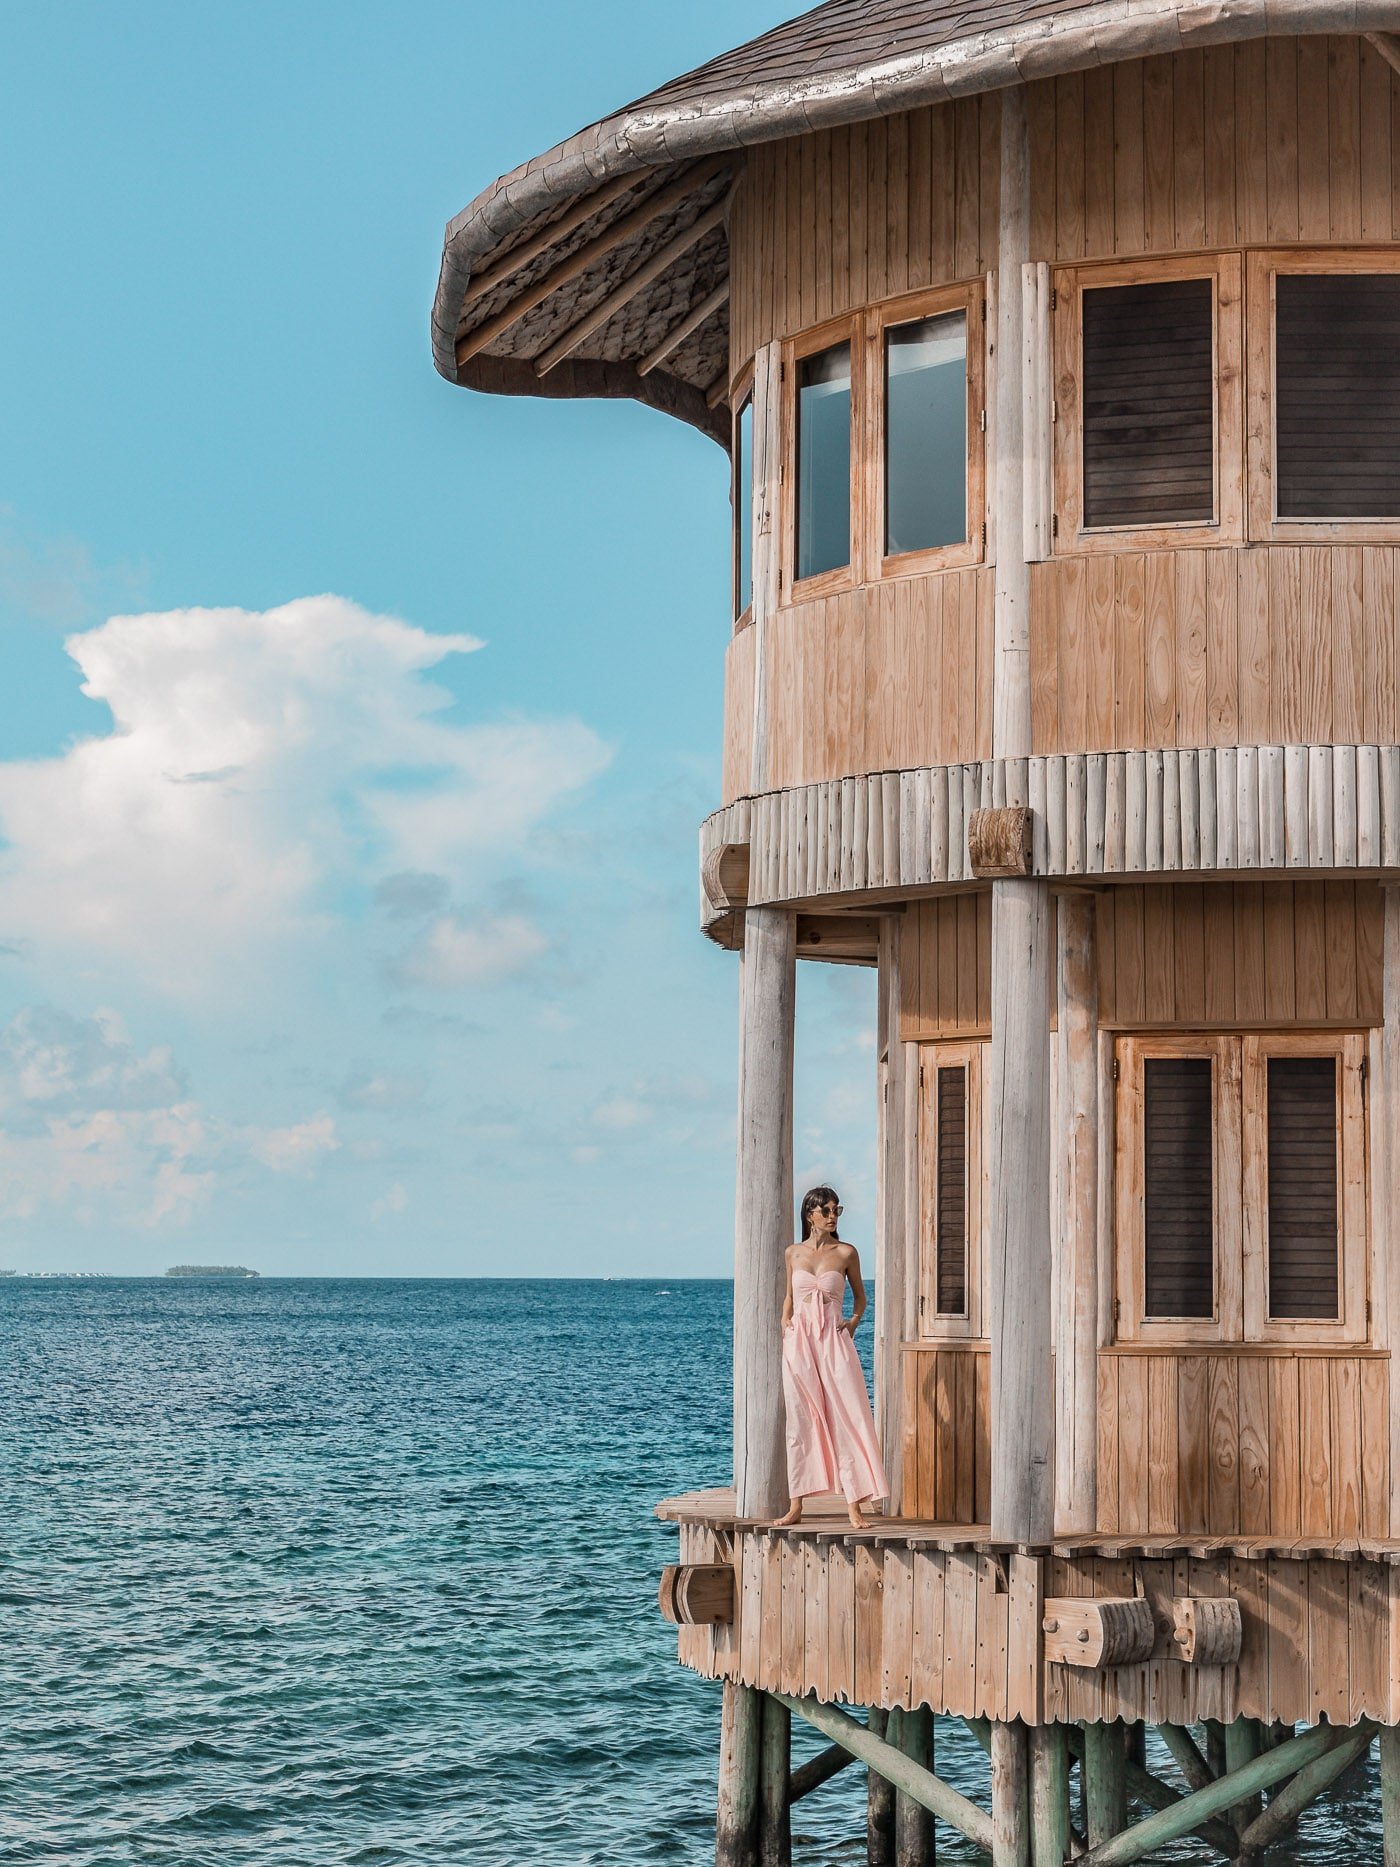 Maldives Soneva Fushi Eco Luxury Resort - Photography + Full Review | האיים המלדיביים - סקירה מלאה על סונבה פושי, ריזורט היוקרה האקולוגי